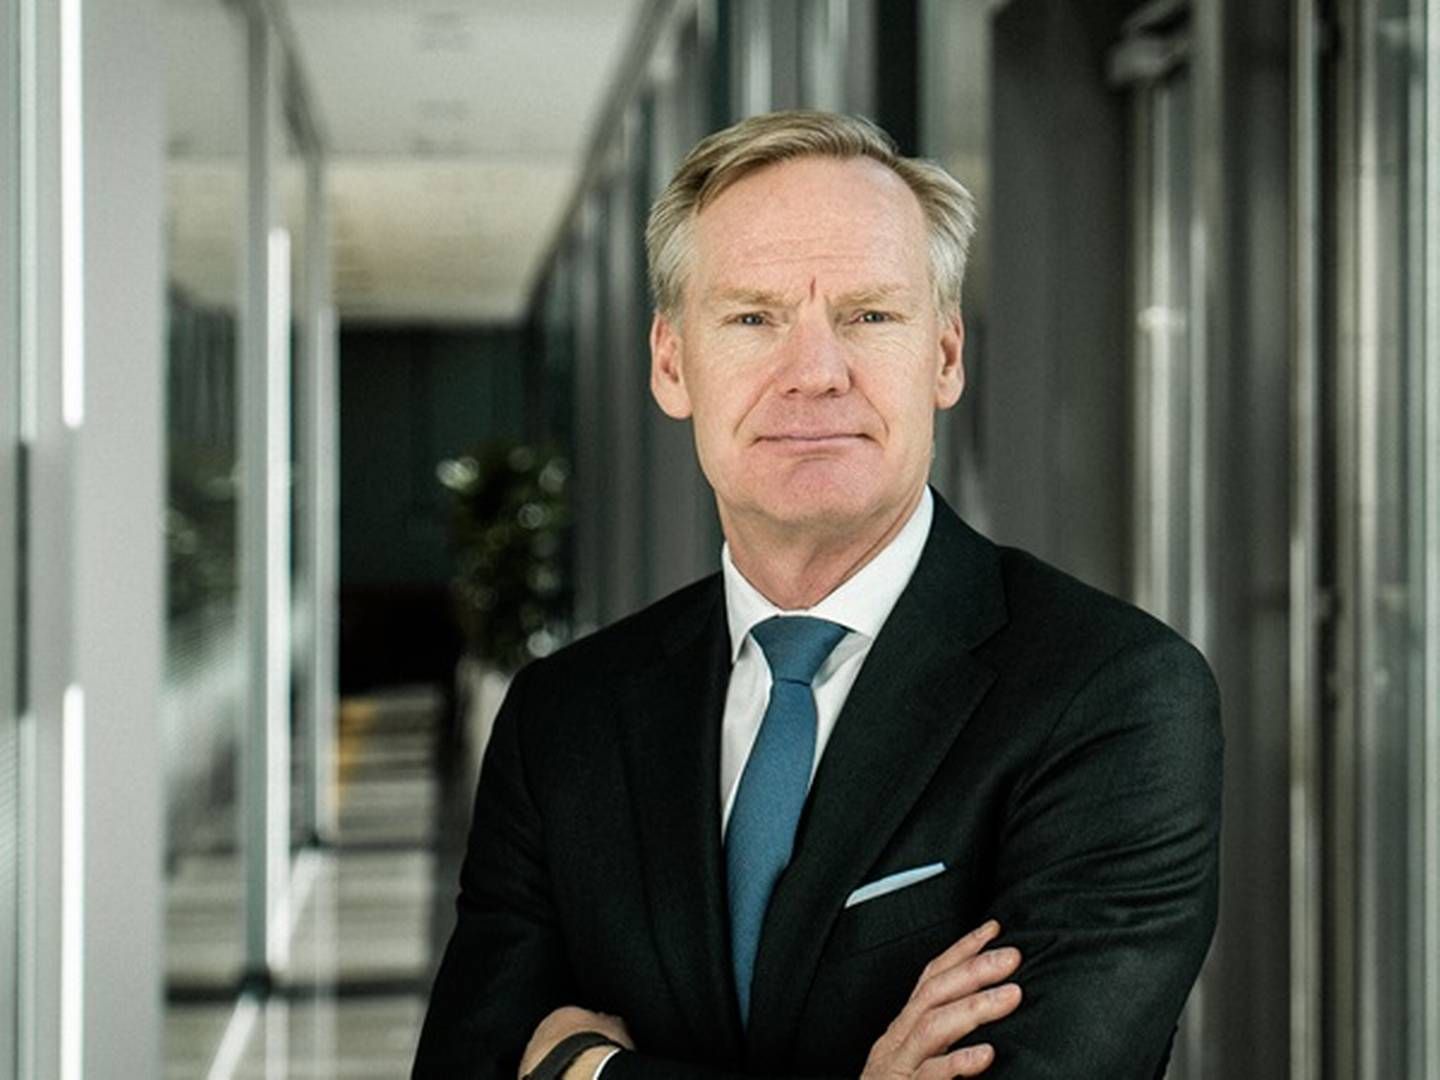 Skandia CEO Frans Lindelöw belives that Sweden's occupational pension system is "rigged" in favor of Alecta. | Photo: Skandia / PR